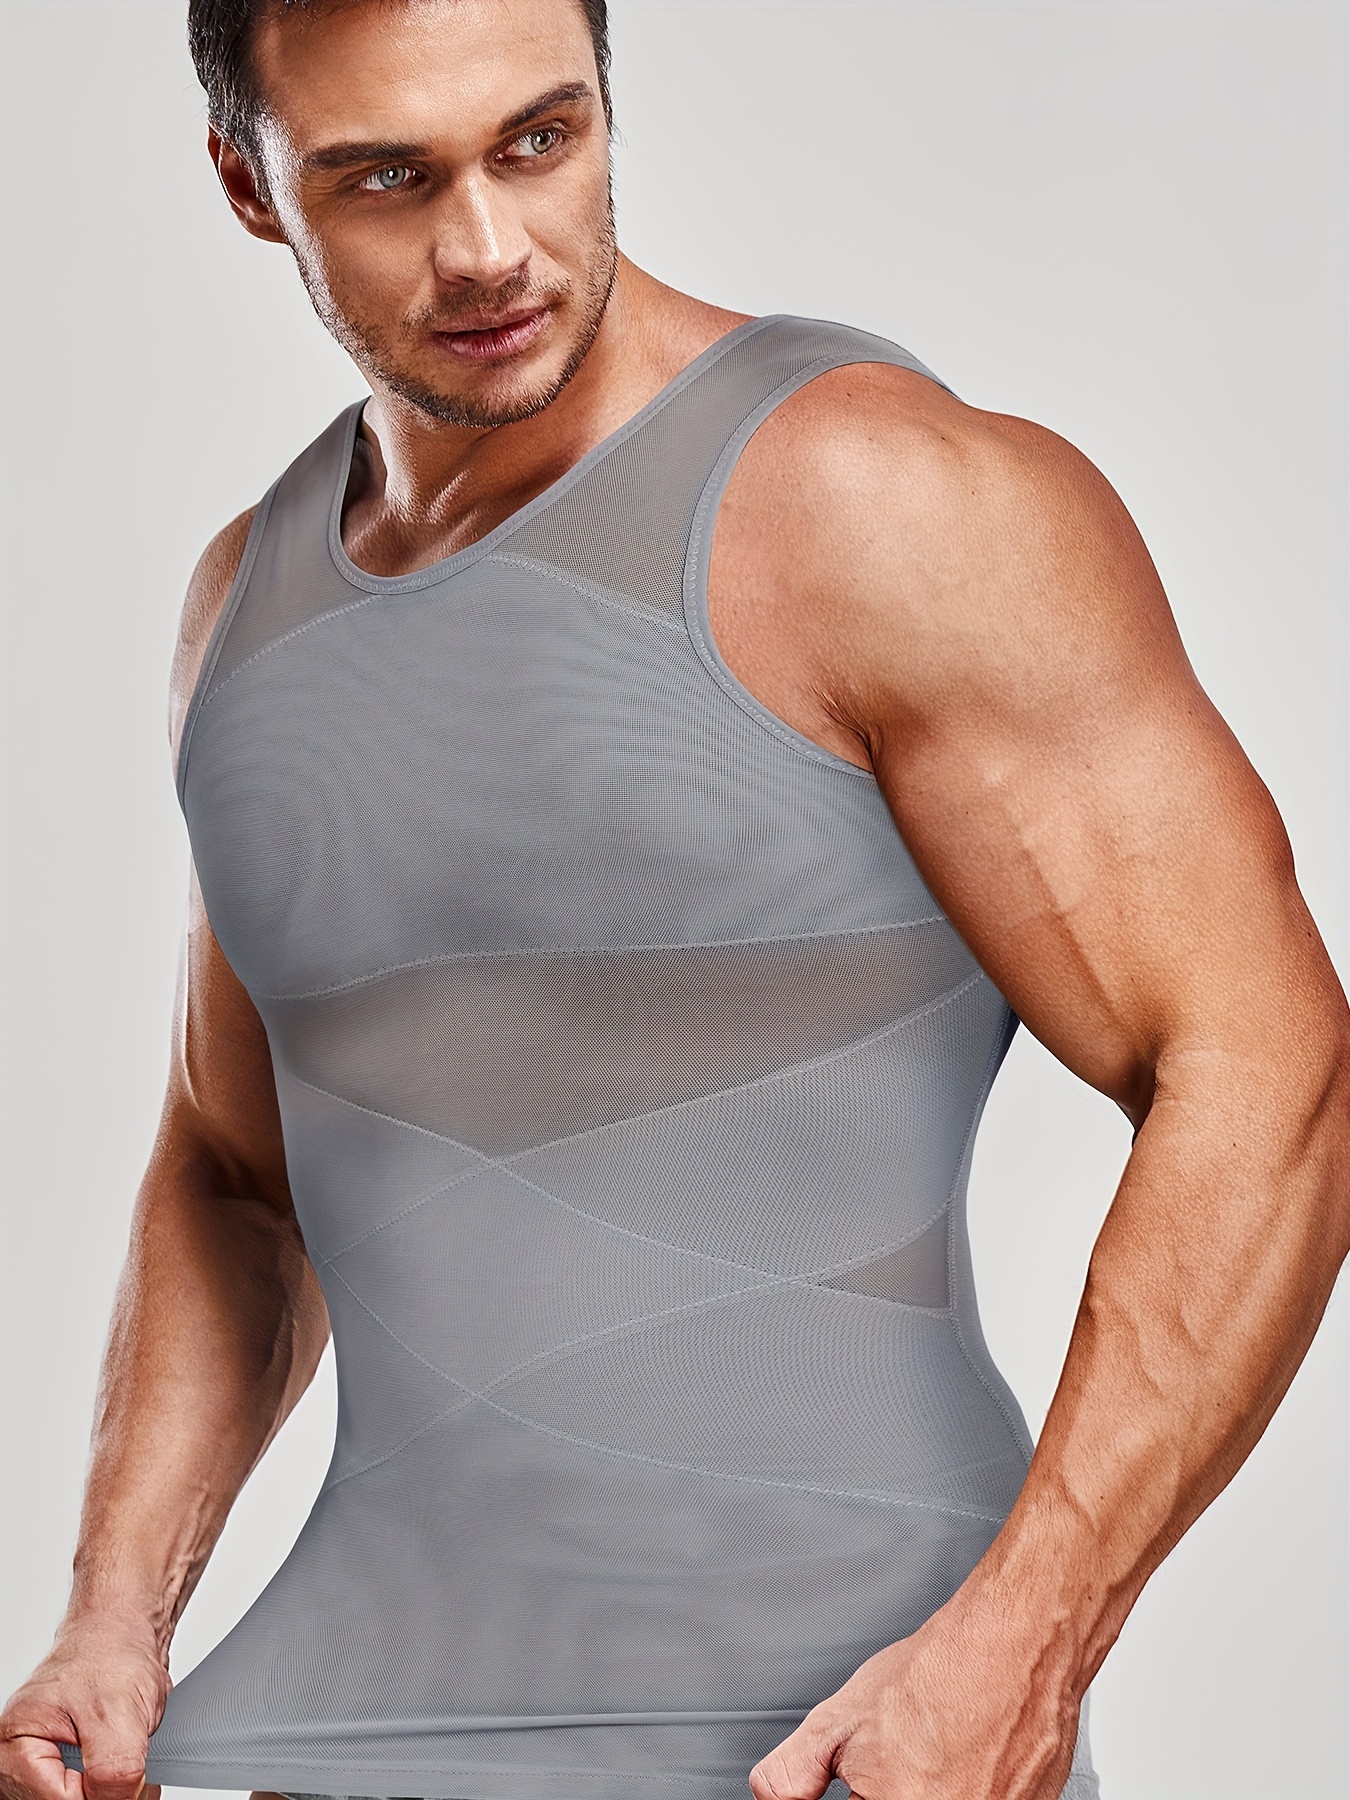 Men's Slimming Body Shaper Compression Tank Top Vest Shirt Abs